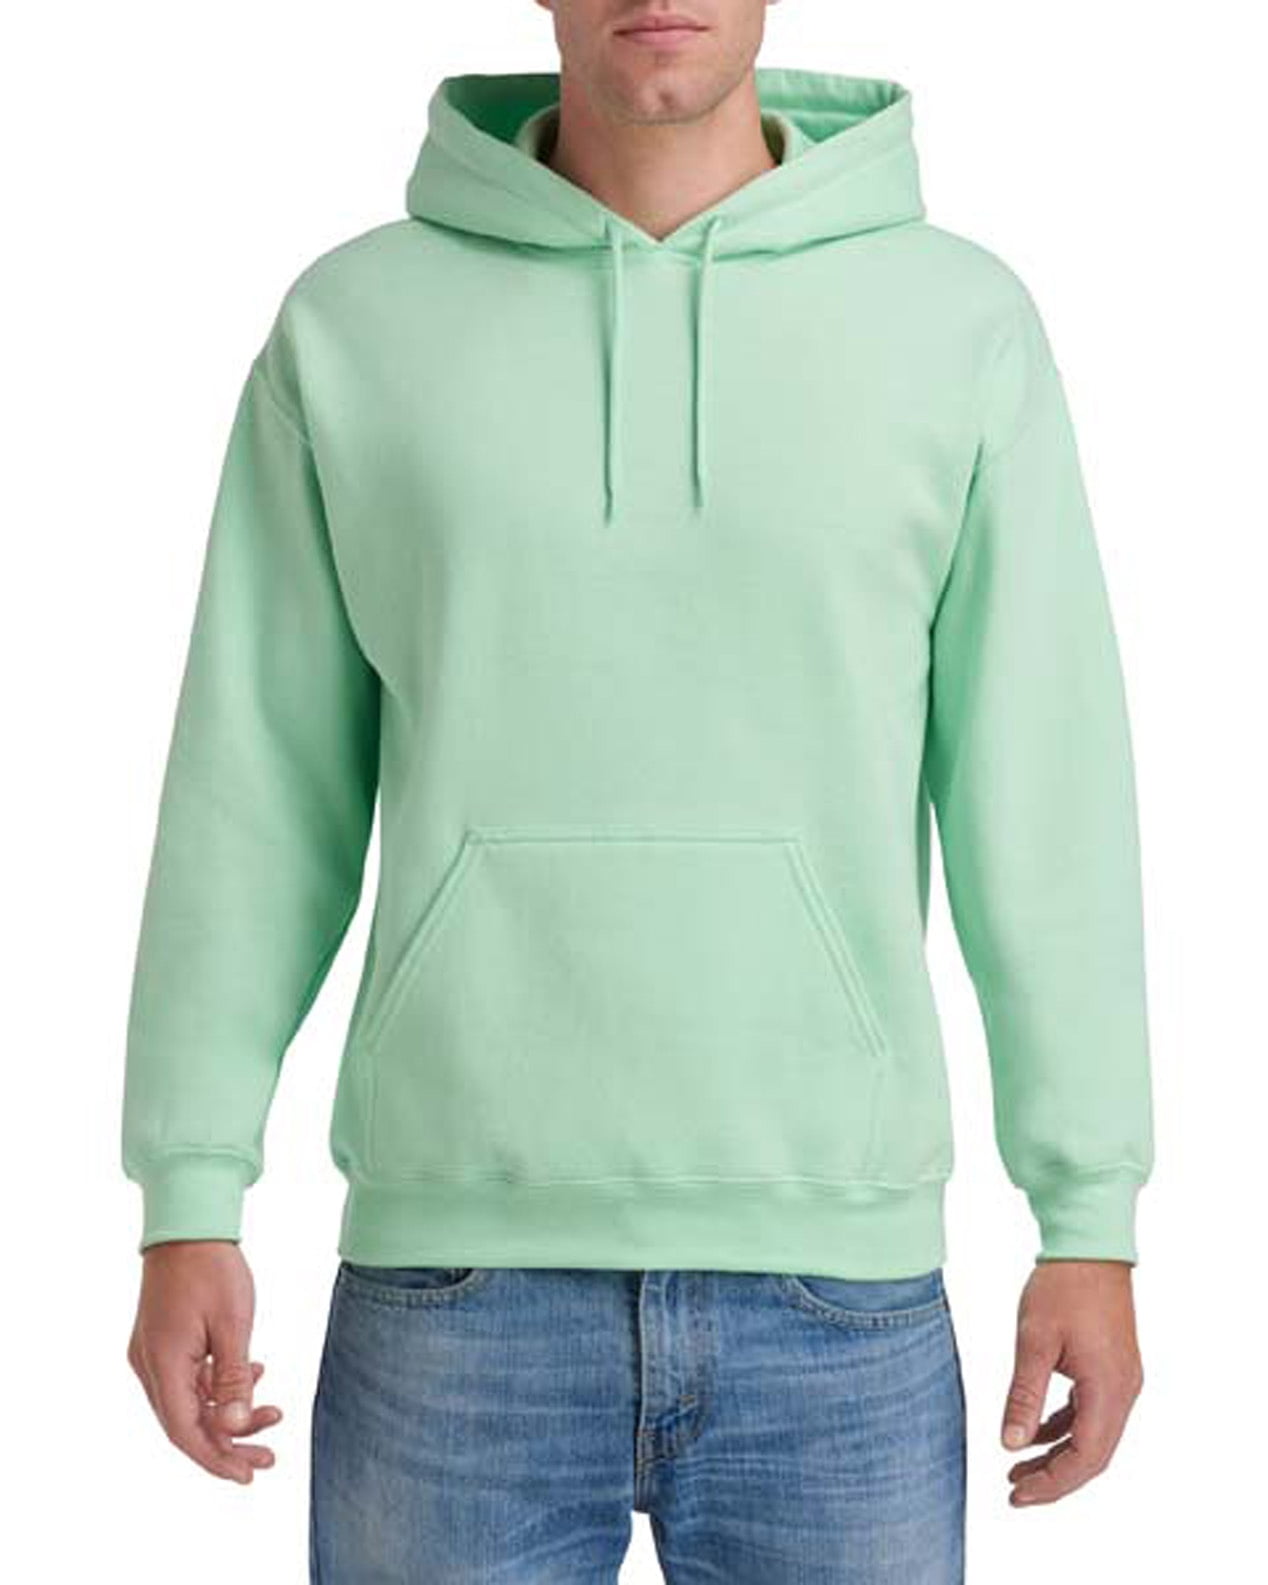 Heavy Blend Hooded Sweatshirt, 2XL, Mint Green - Walmart.com